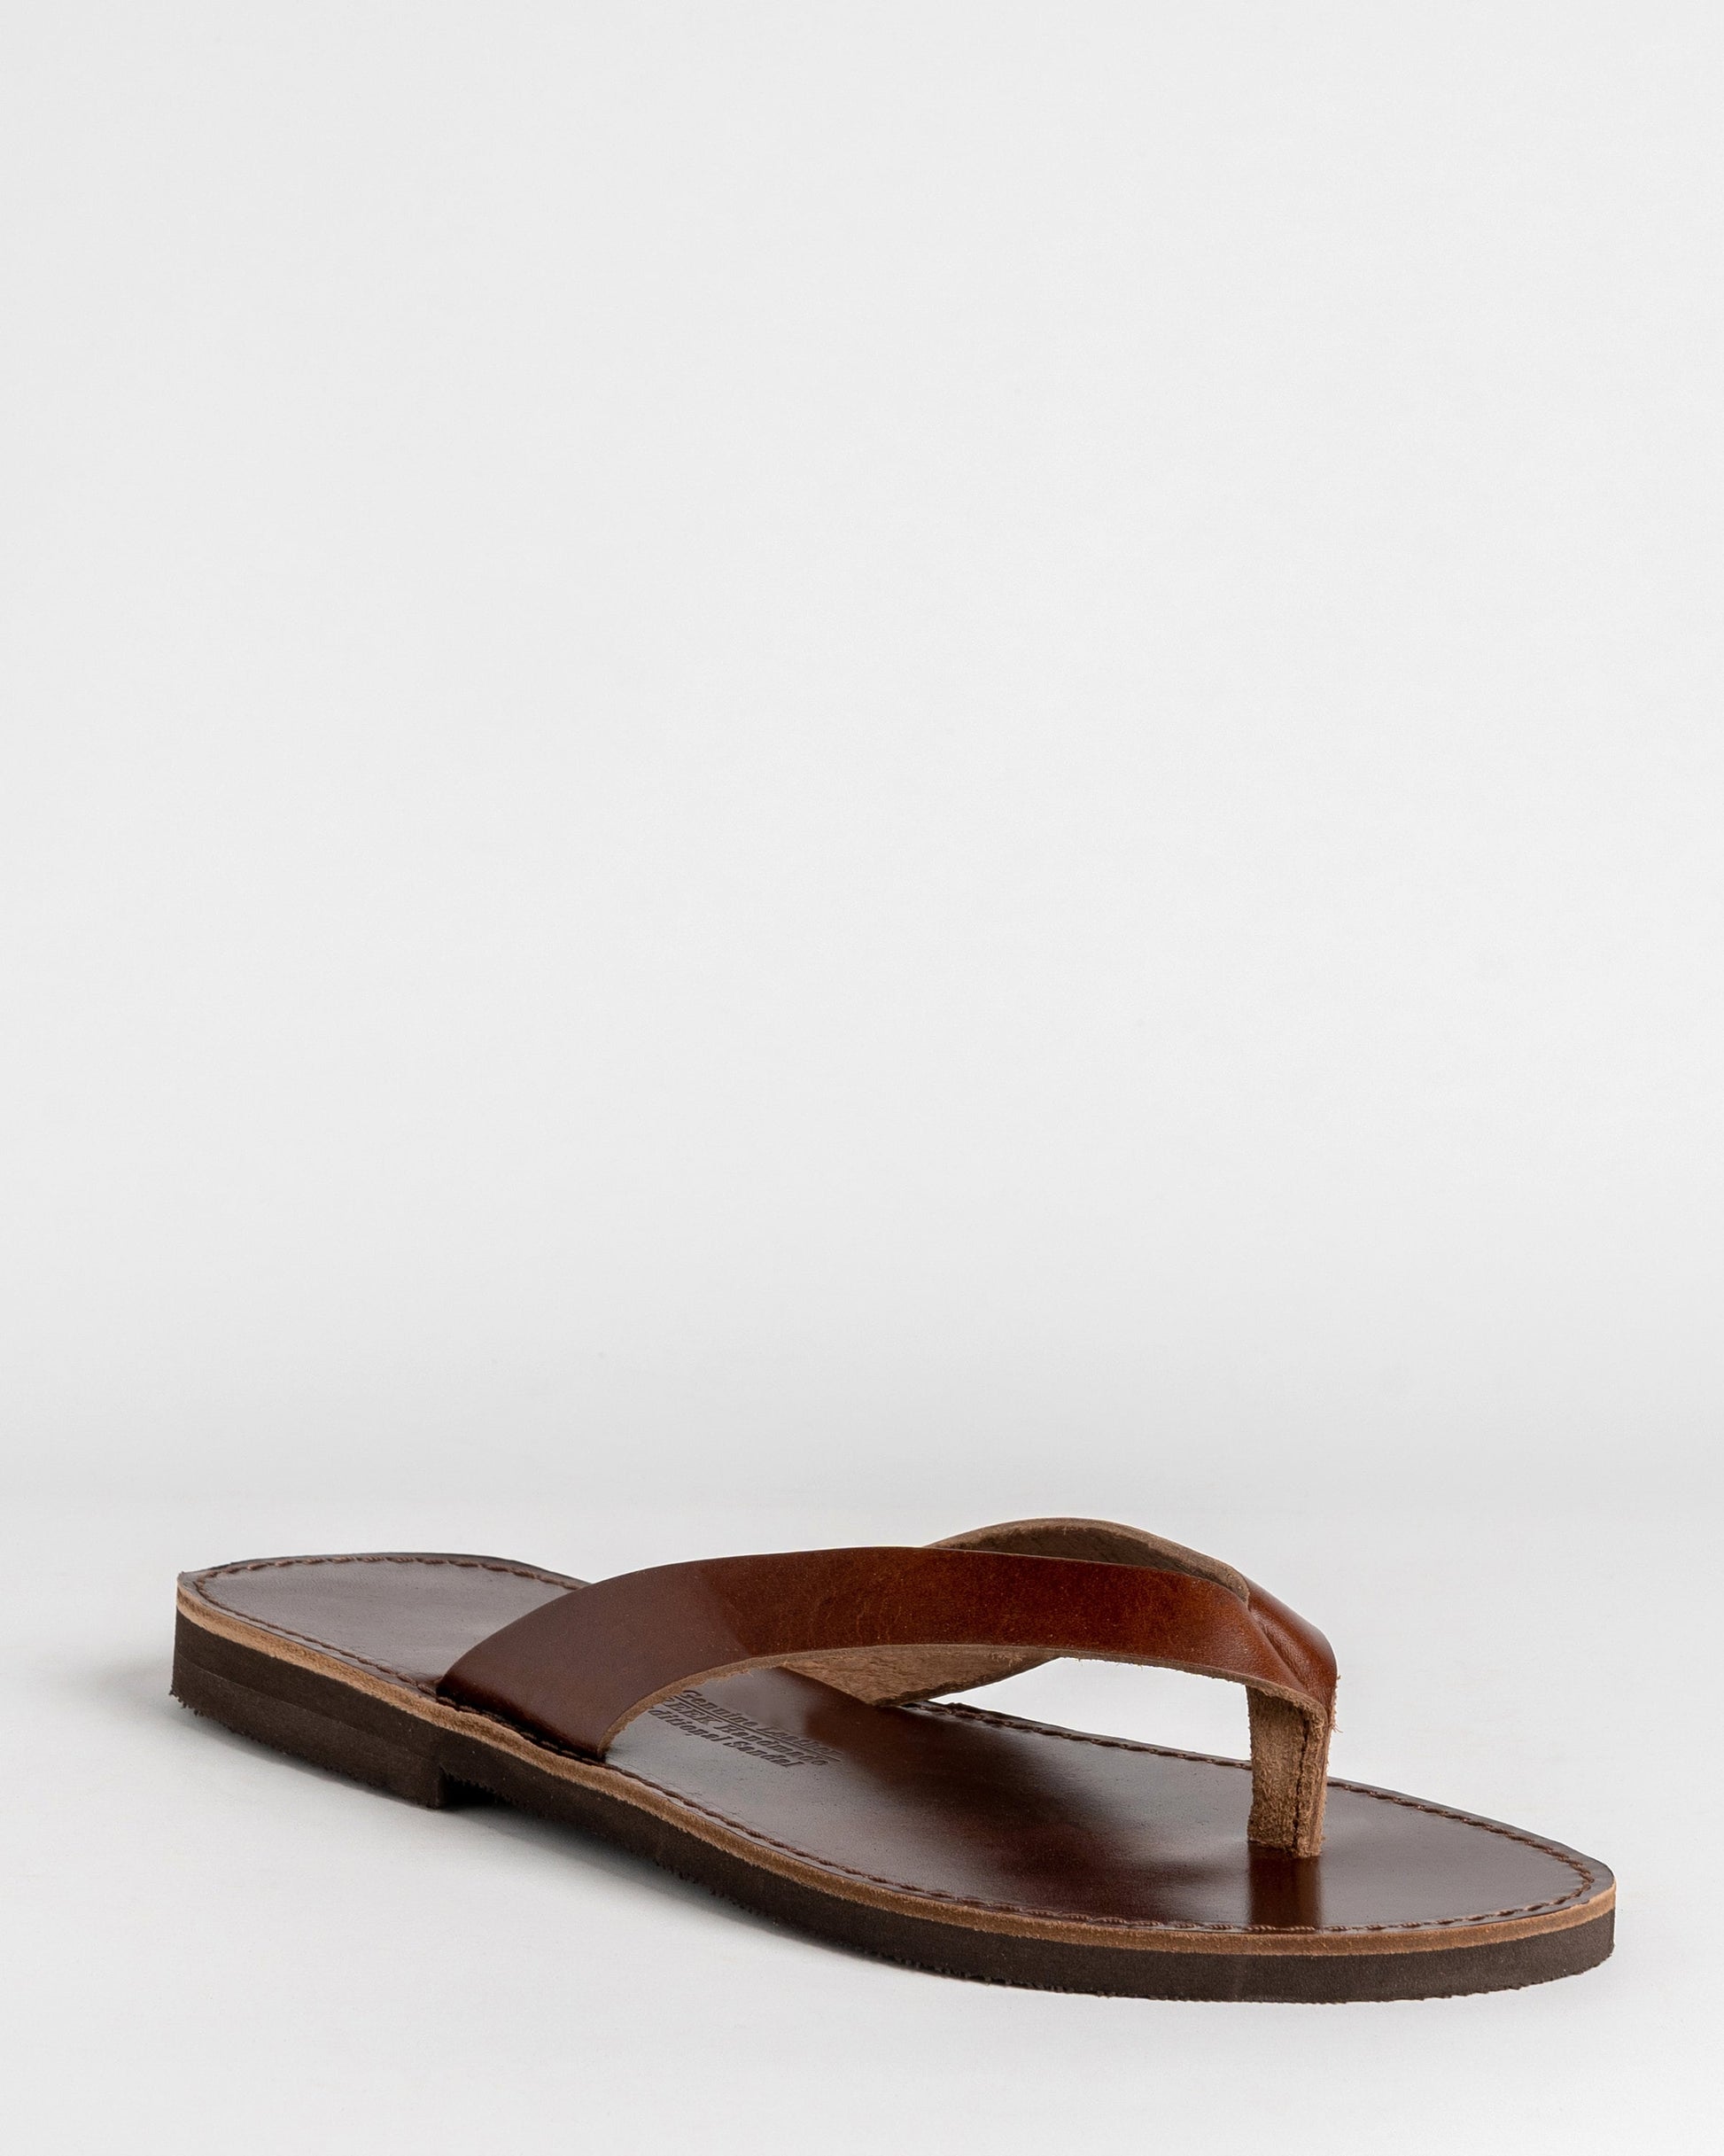 Mens sandals leather, Leather Greek sandals, Minimalist sandals, Sandales cuir homme, Sandalen herren, Sandali uomo